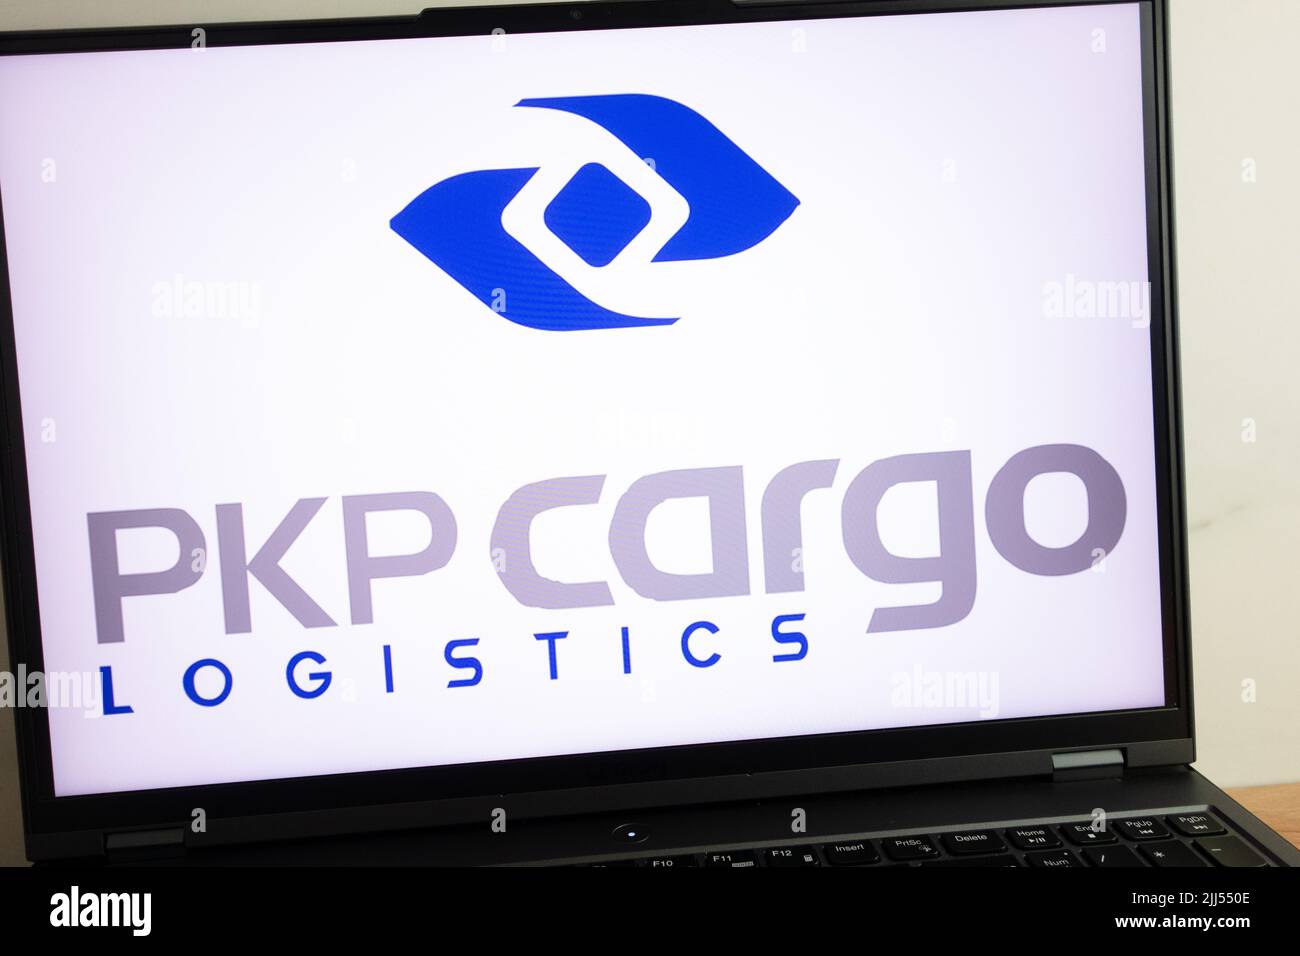 KONSKIE, POLAND - July 19, 2022: PKP Cargo logistics operator logo displayed on laptop computer screen Stock Photo